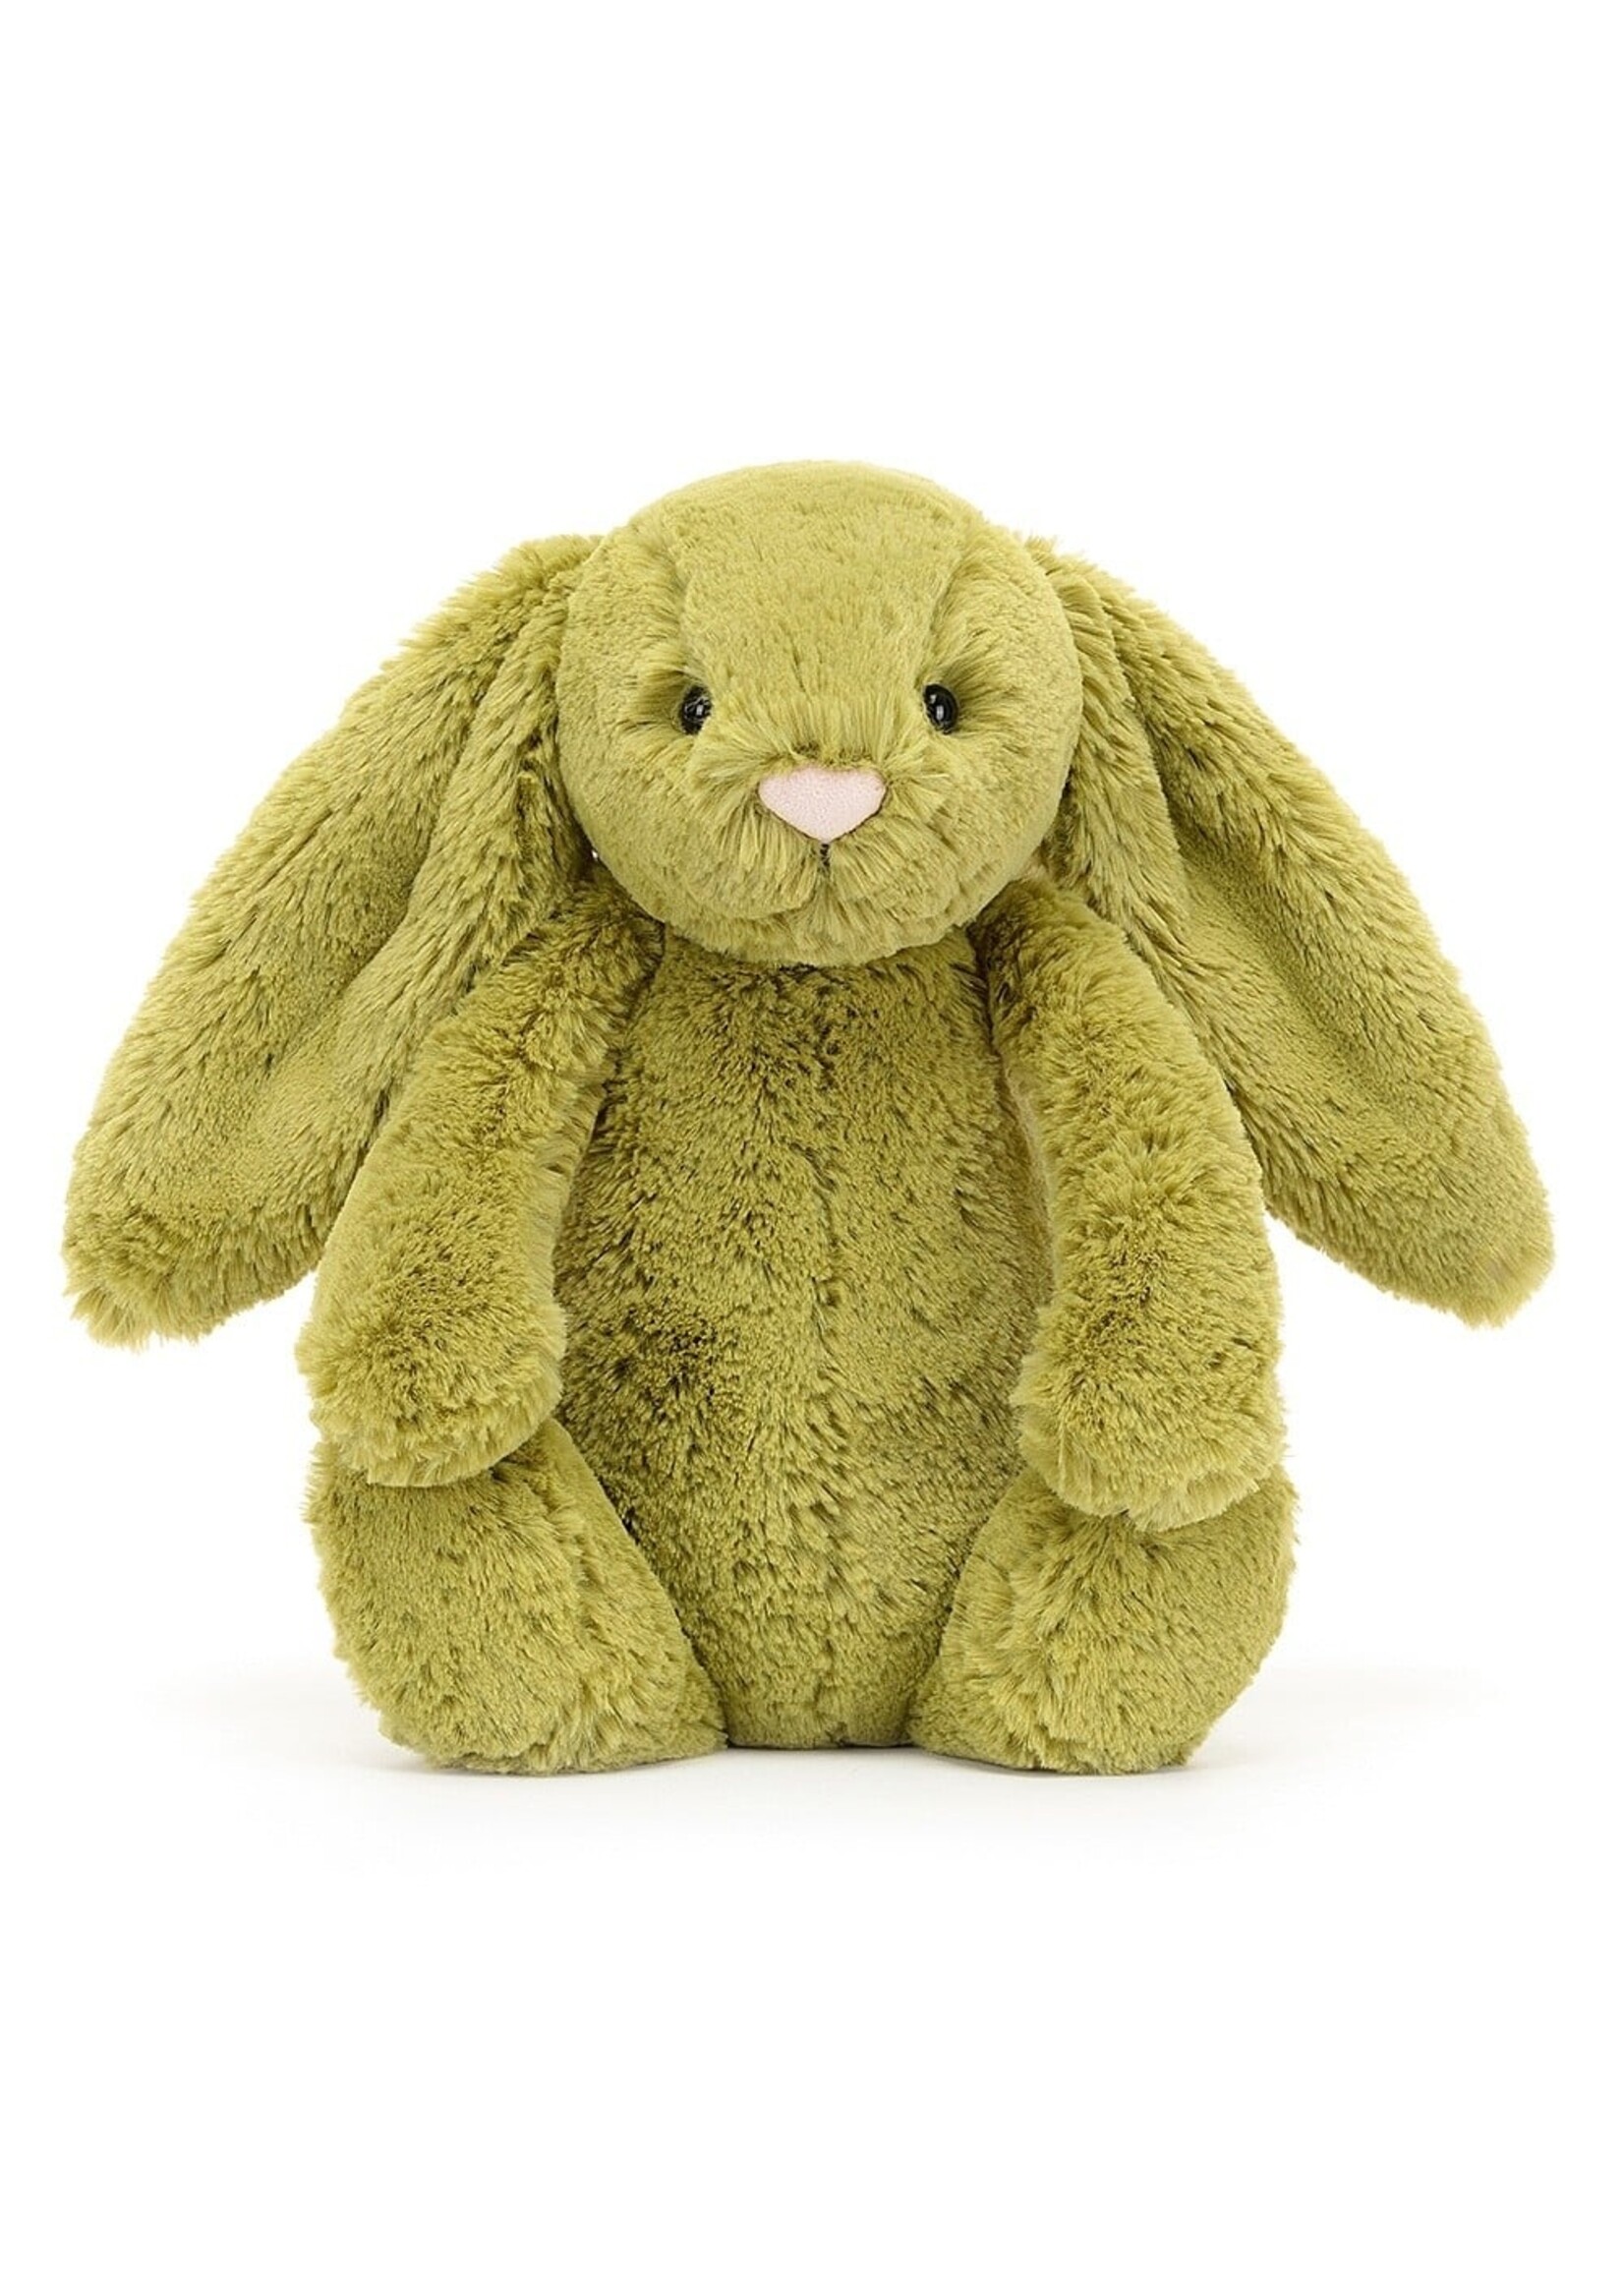 Jellycat Bashful Moss Bunny - Medium